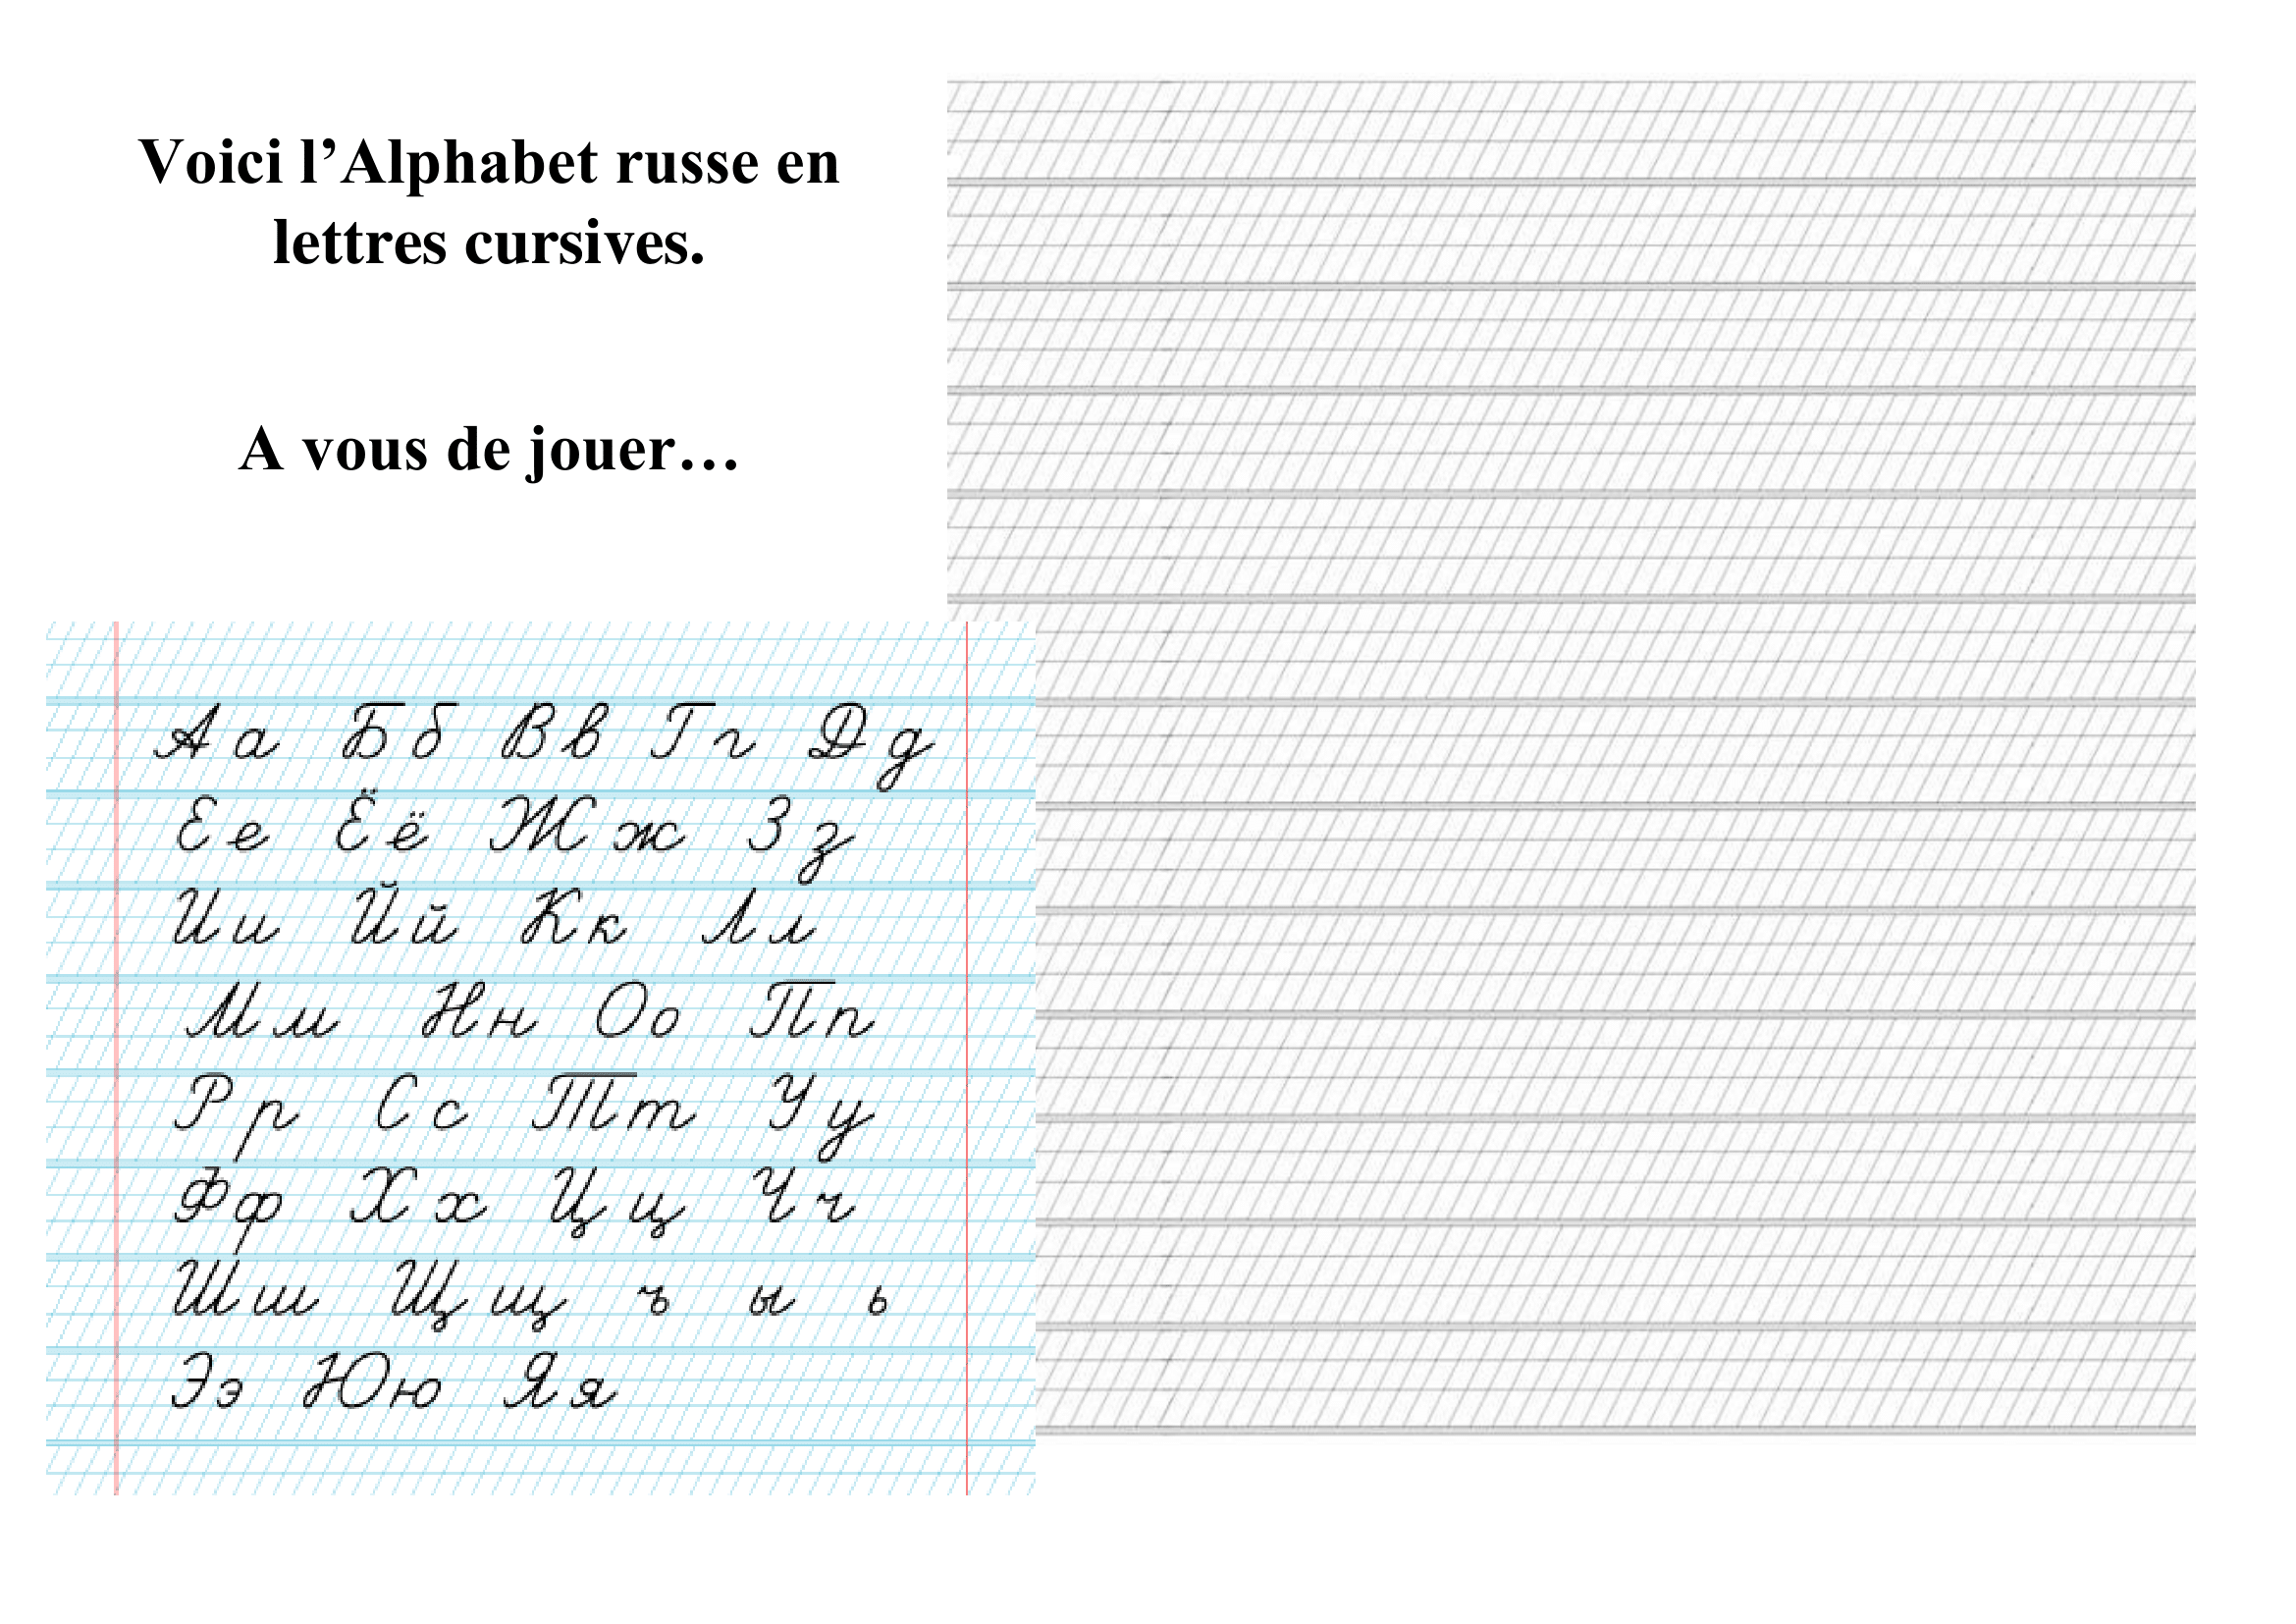 alphabet 1